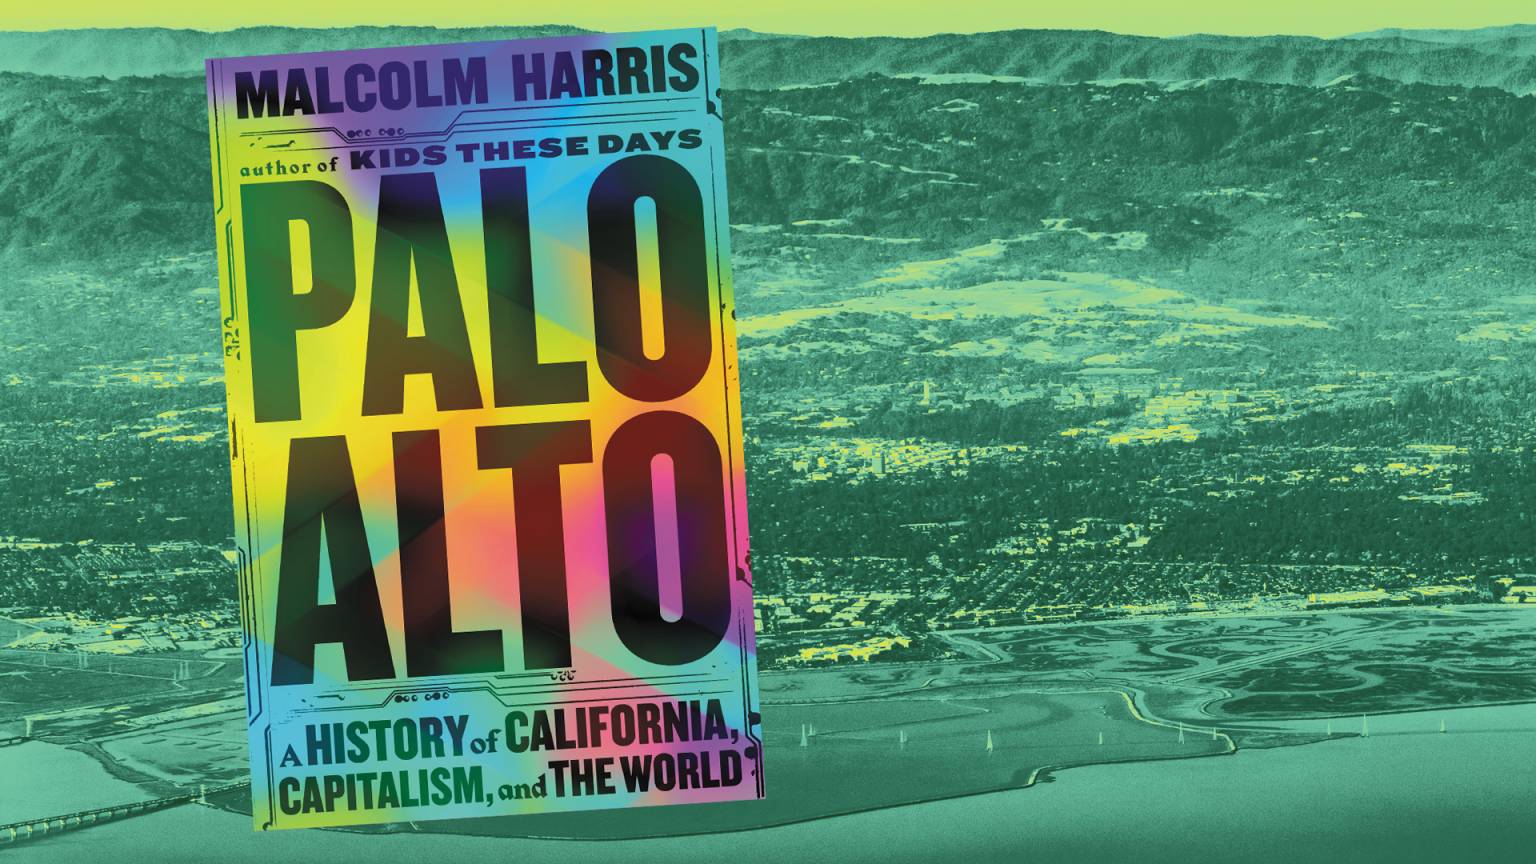 New Book “Palo Alto” Explores The History Of California’s Capitalism